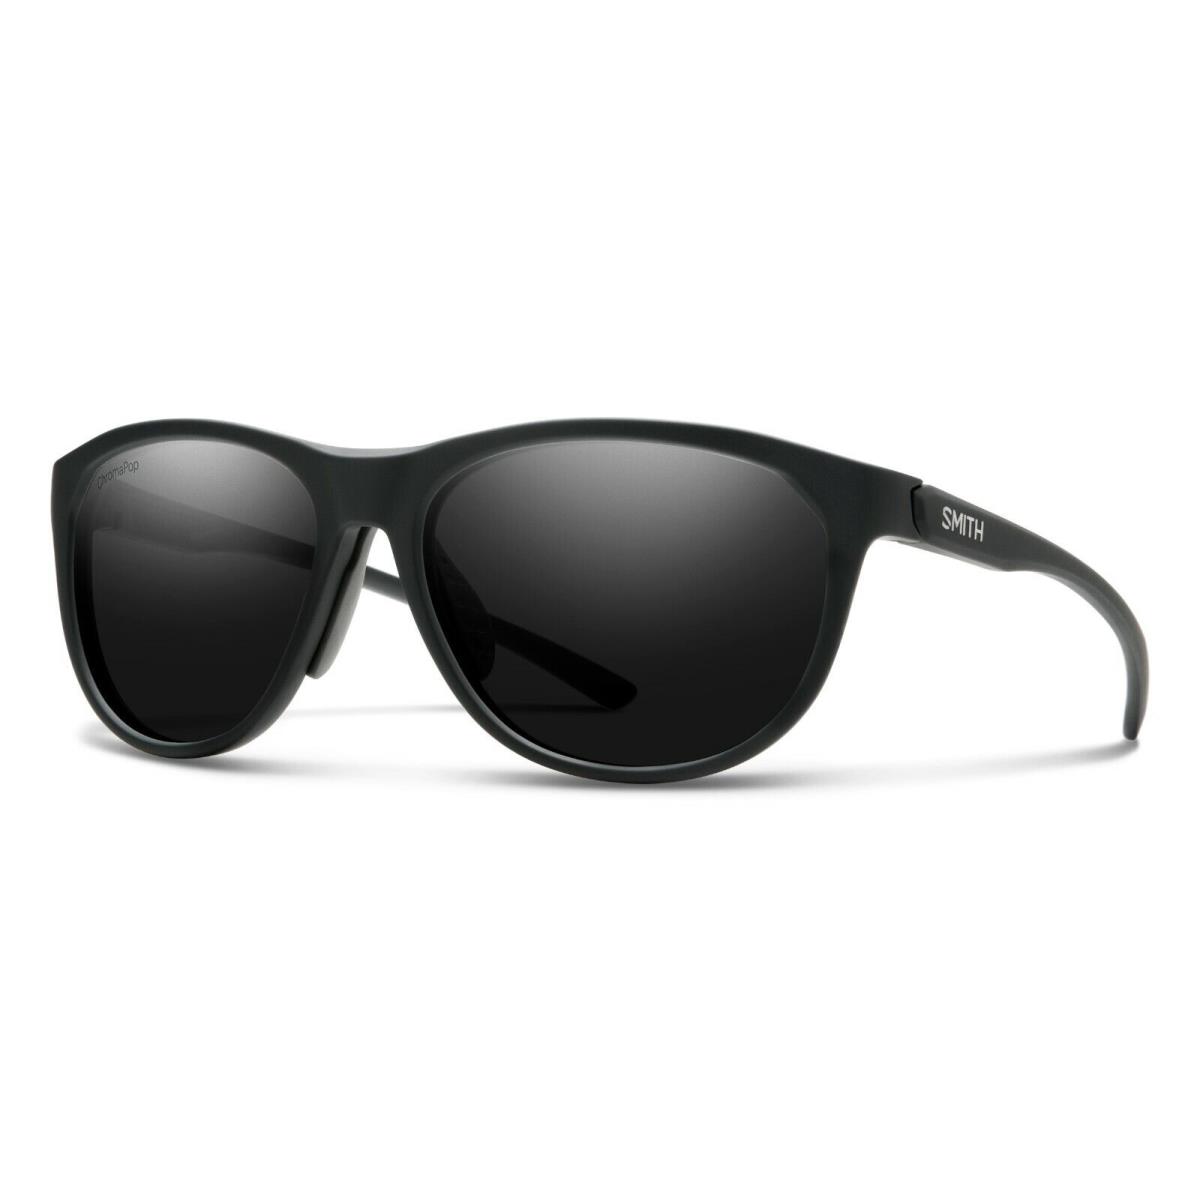 Smith Optics Uproar Sunglasses Chromapop Matte Black-polarized Black